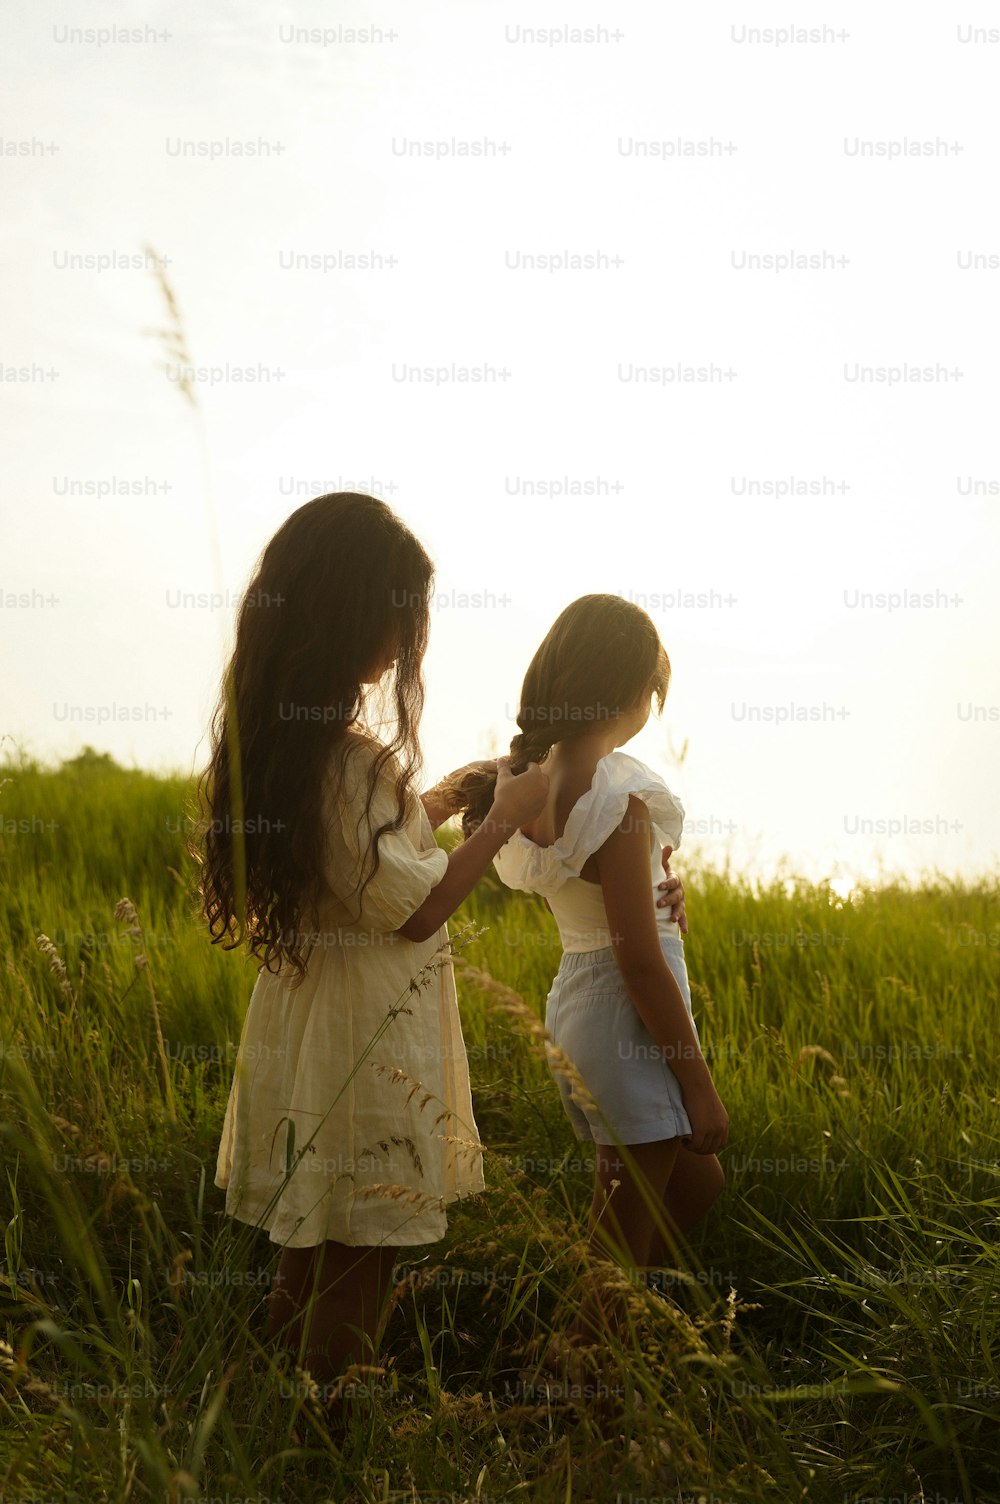 two little girls standing in a grassy field